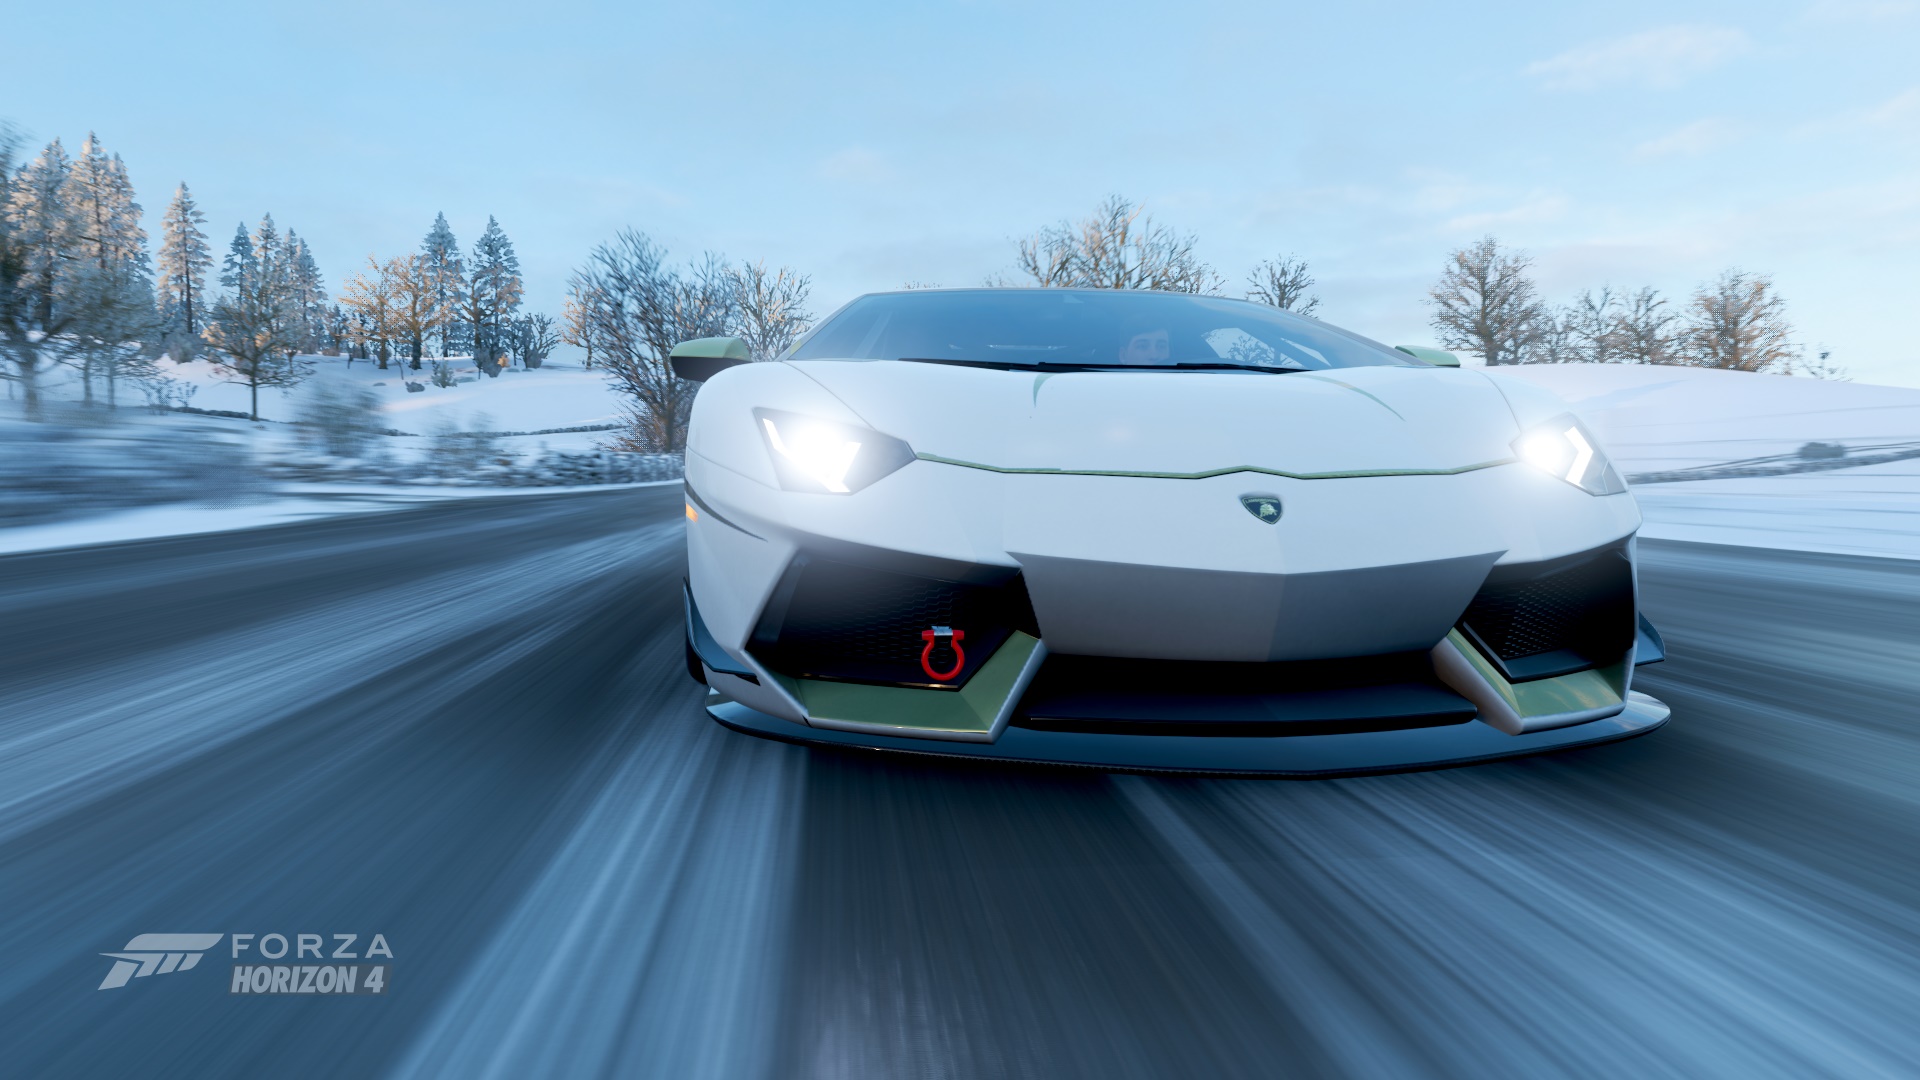 General 1920x1080 Forza Forza Horizon 4 car vehicle sports car Speed Racer race cars Lamborghini video games